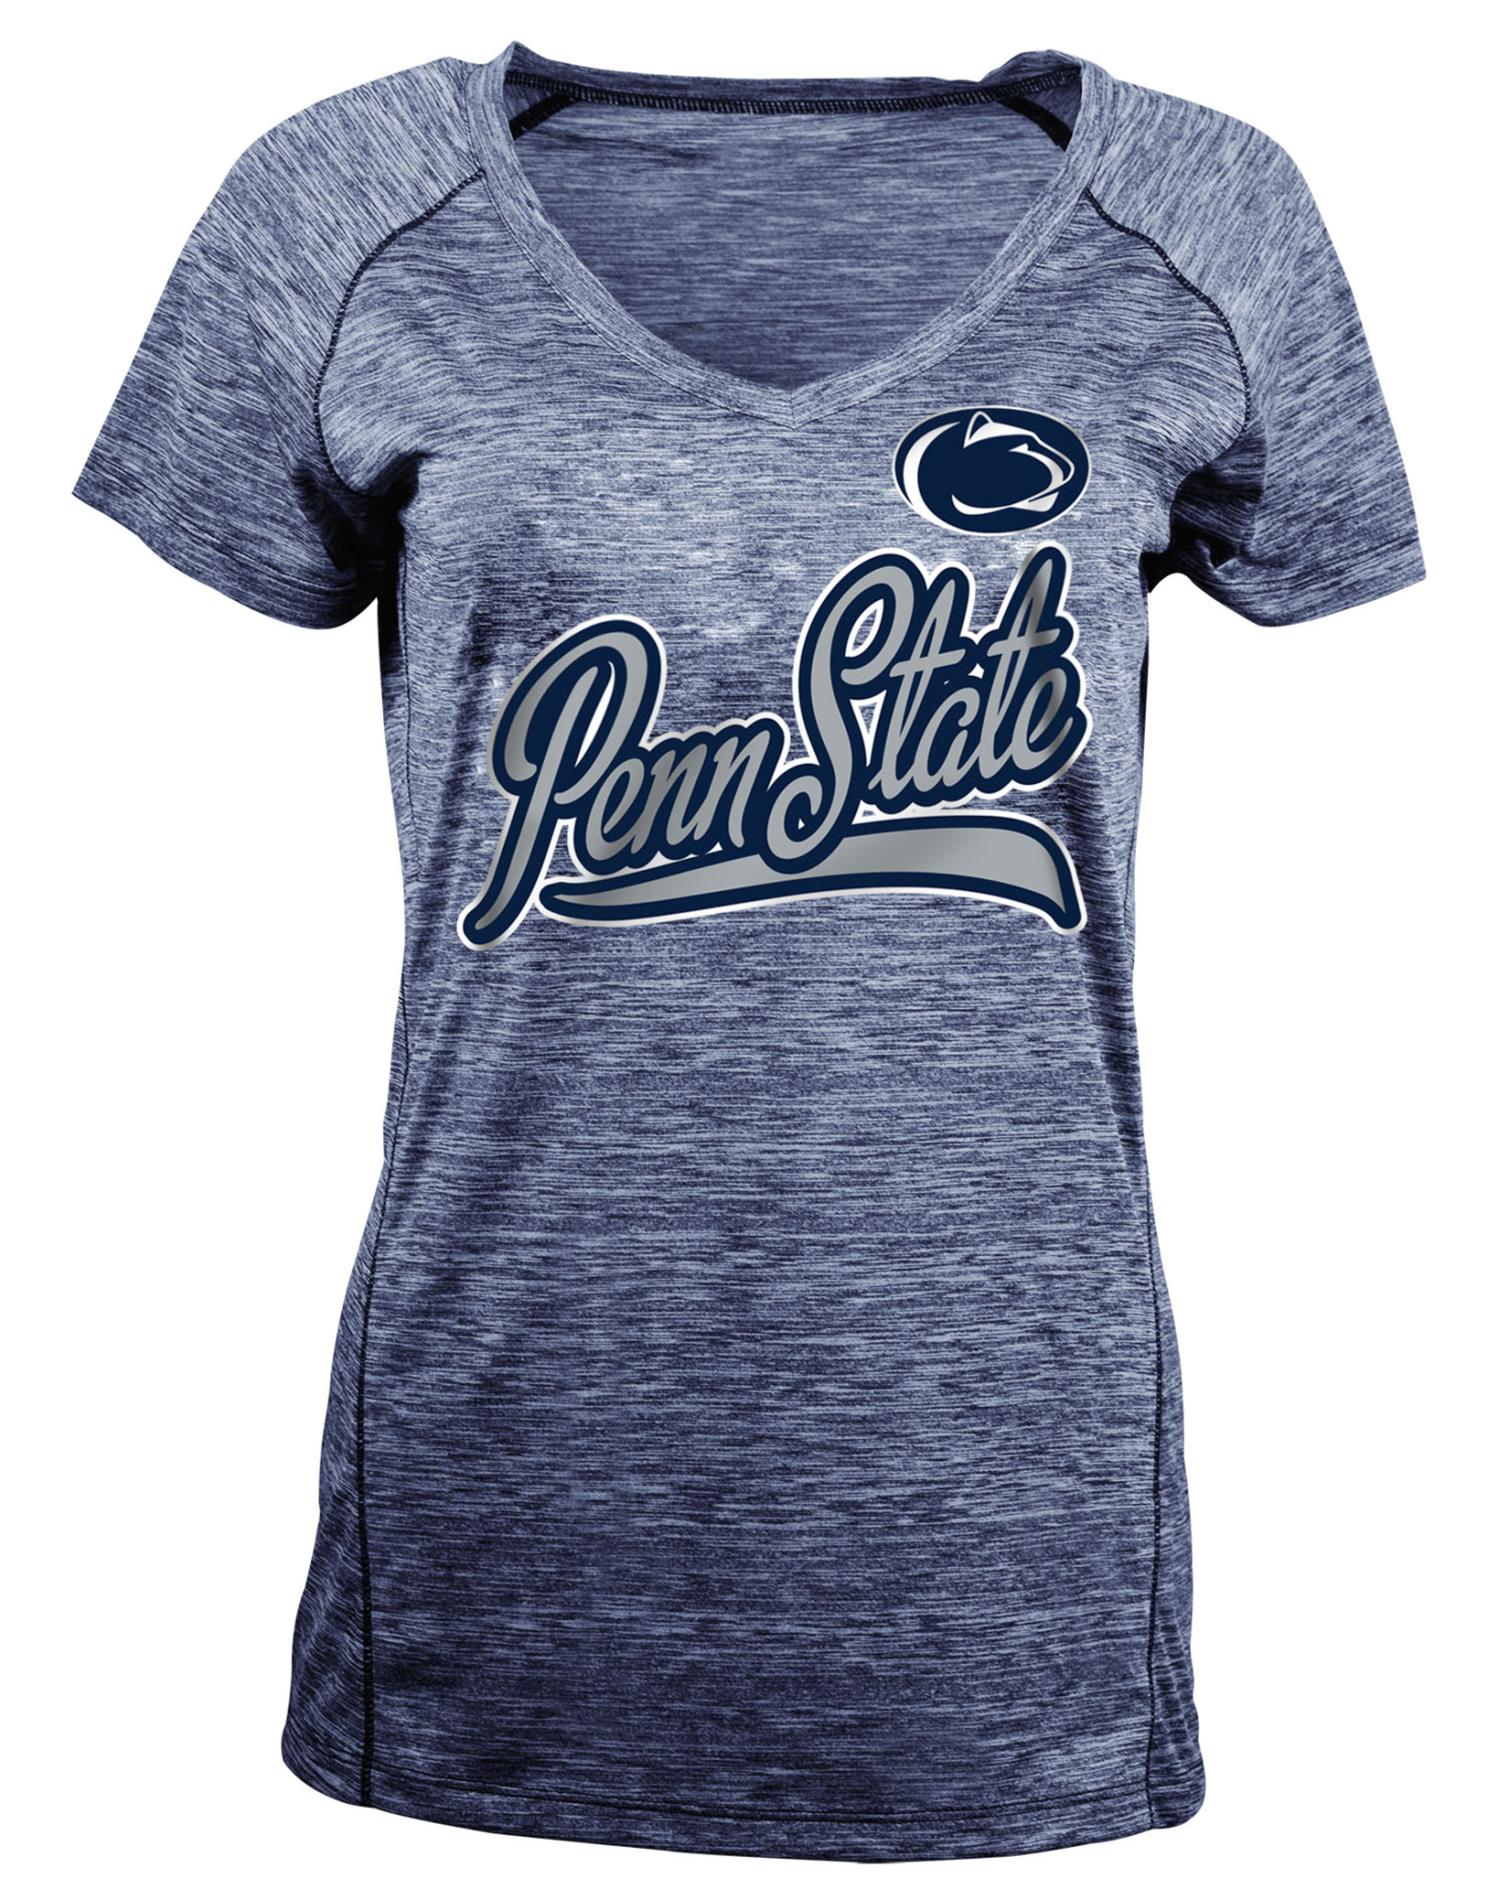 NCAA Women's Performance Shirt - Penn State University Nittany Lions